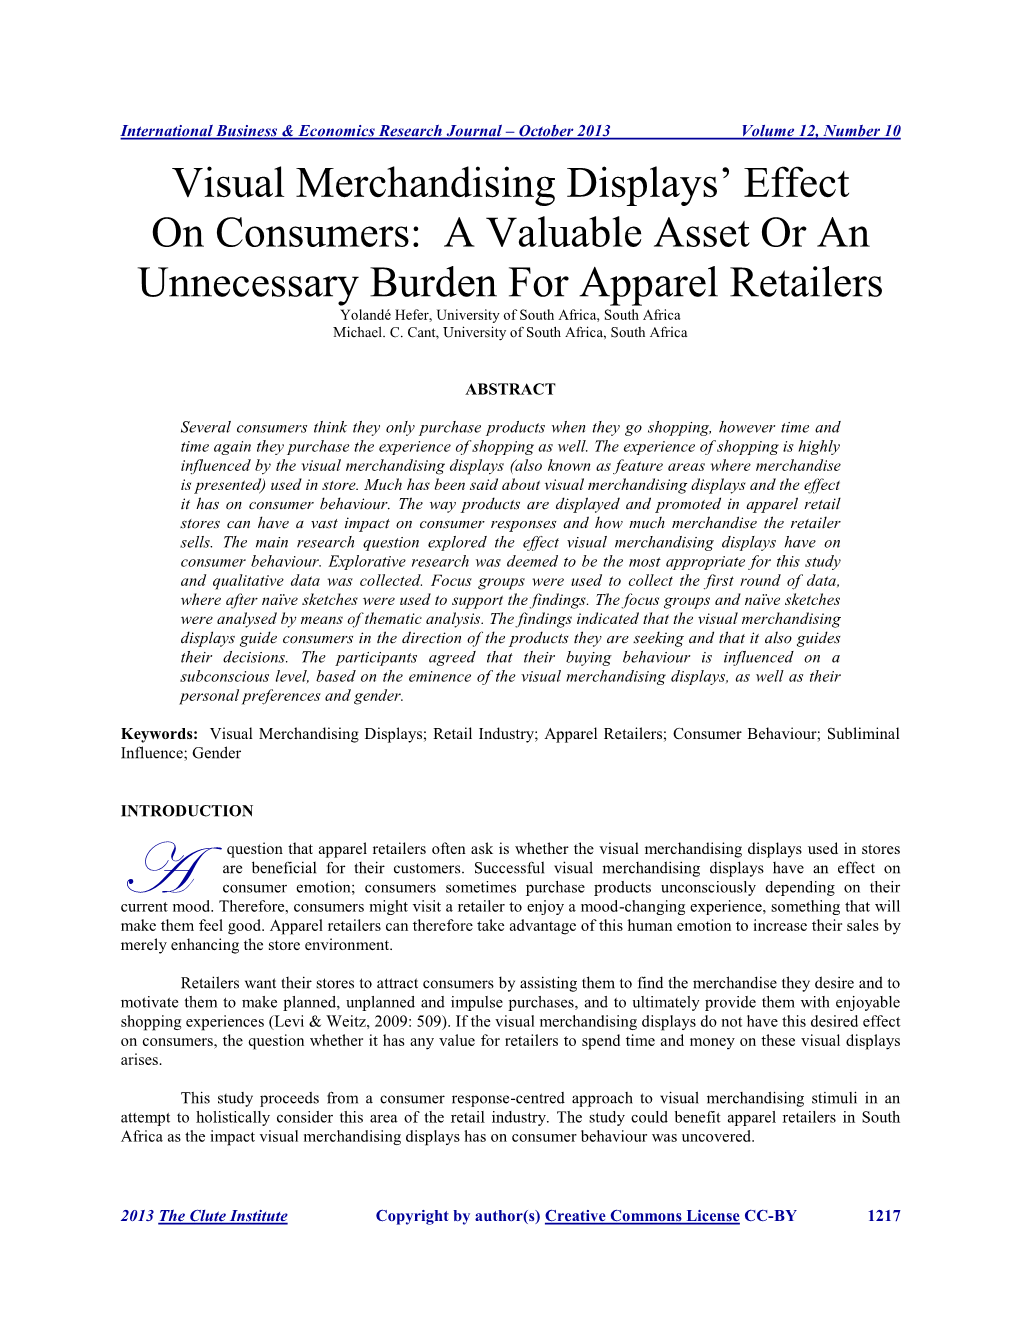 Visual Merchandising Displays' Effect on Consumers